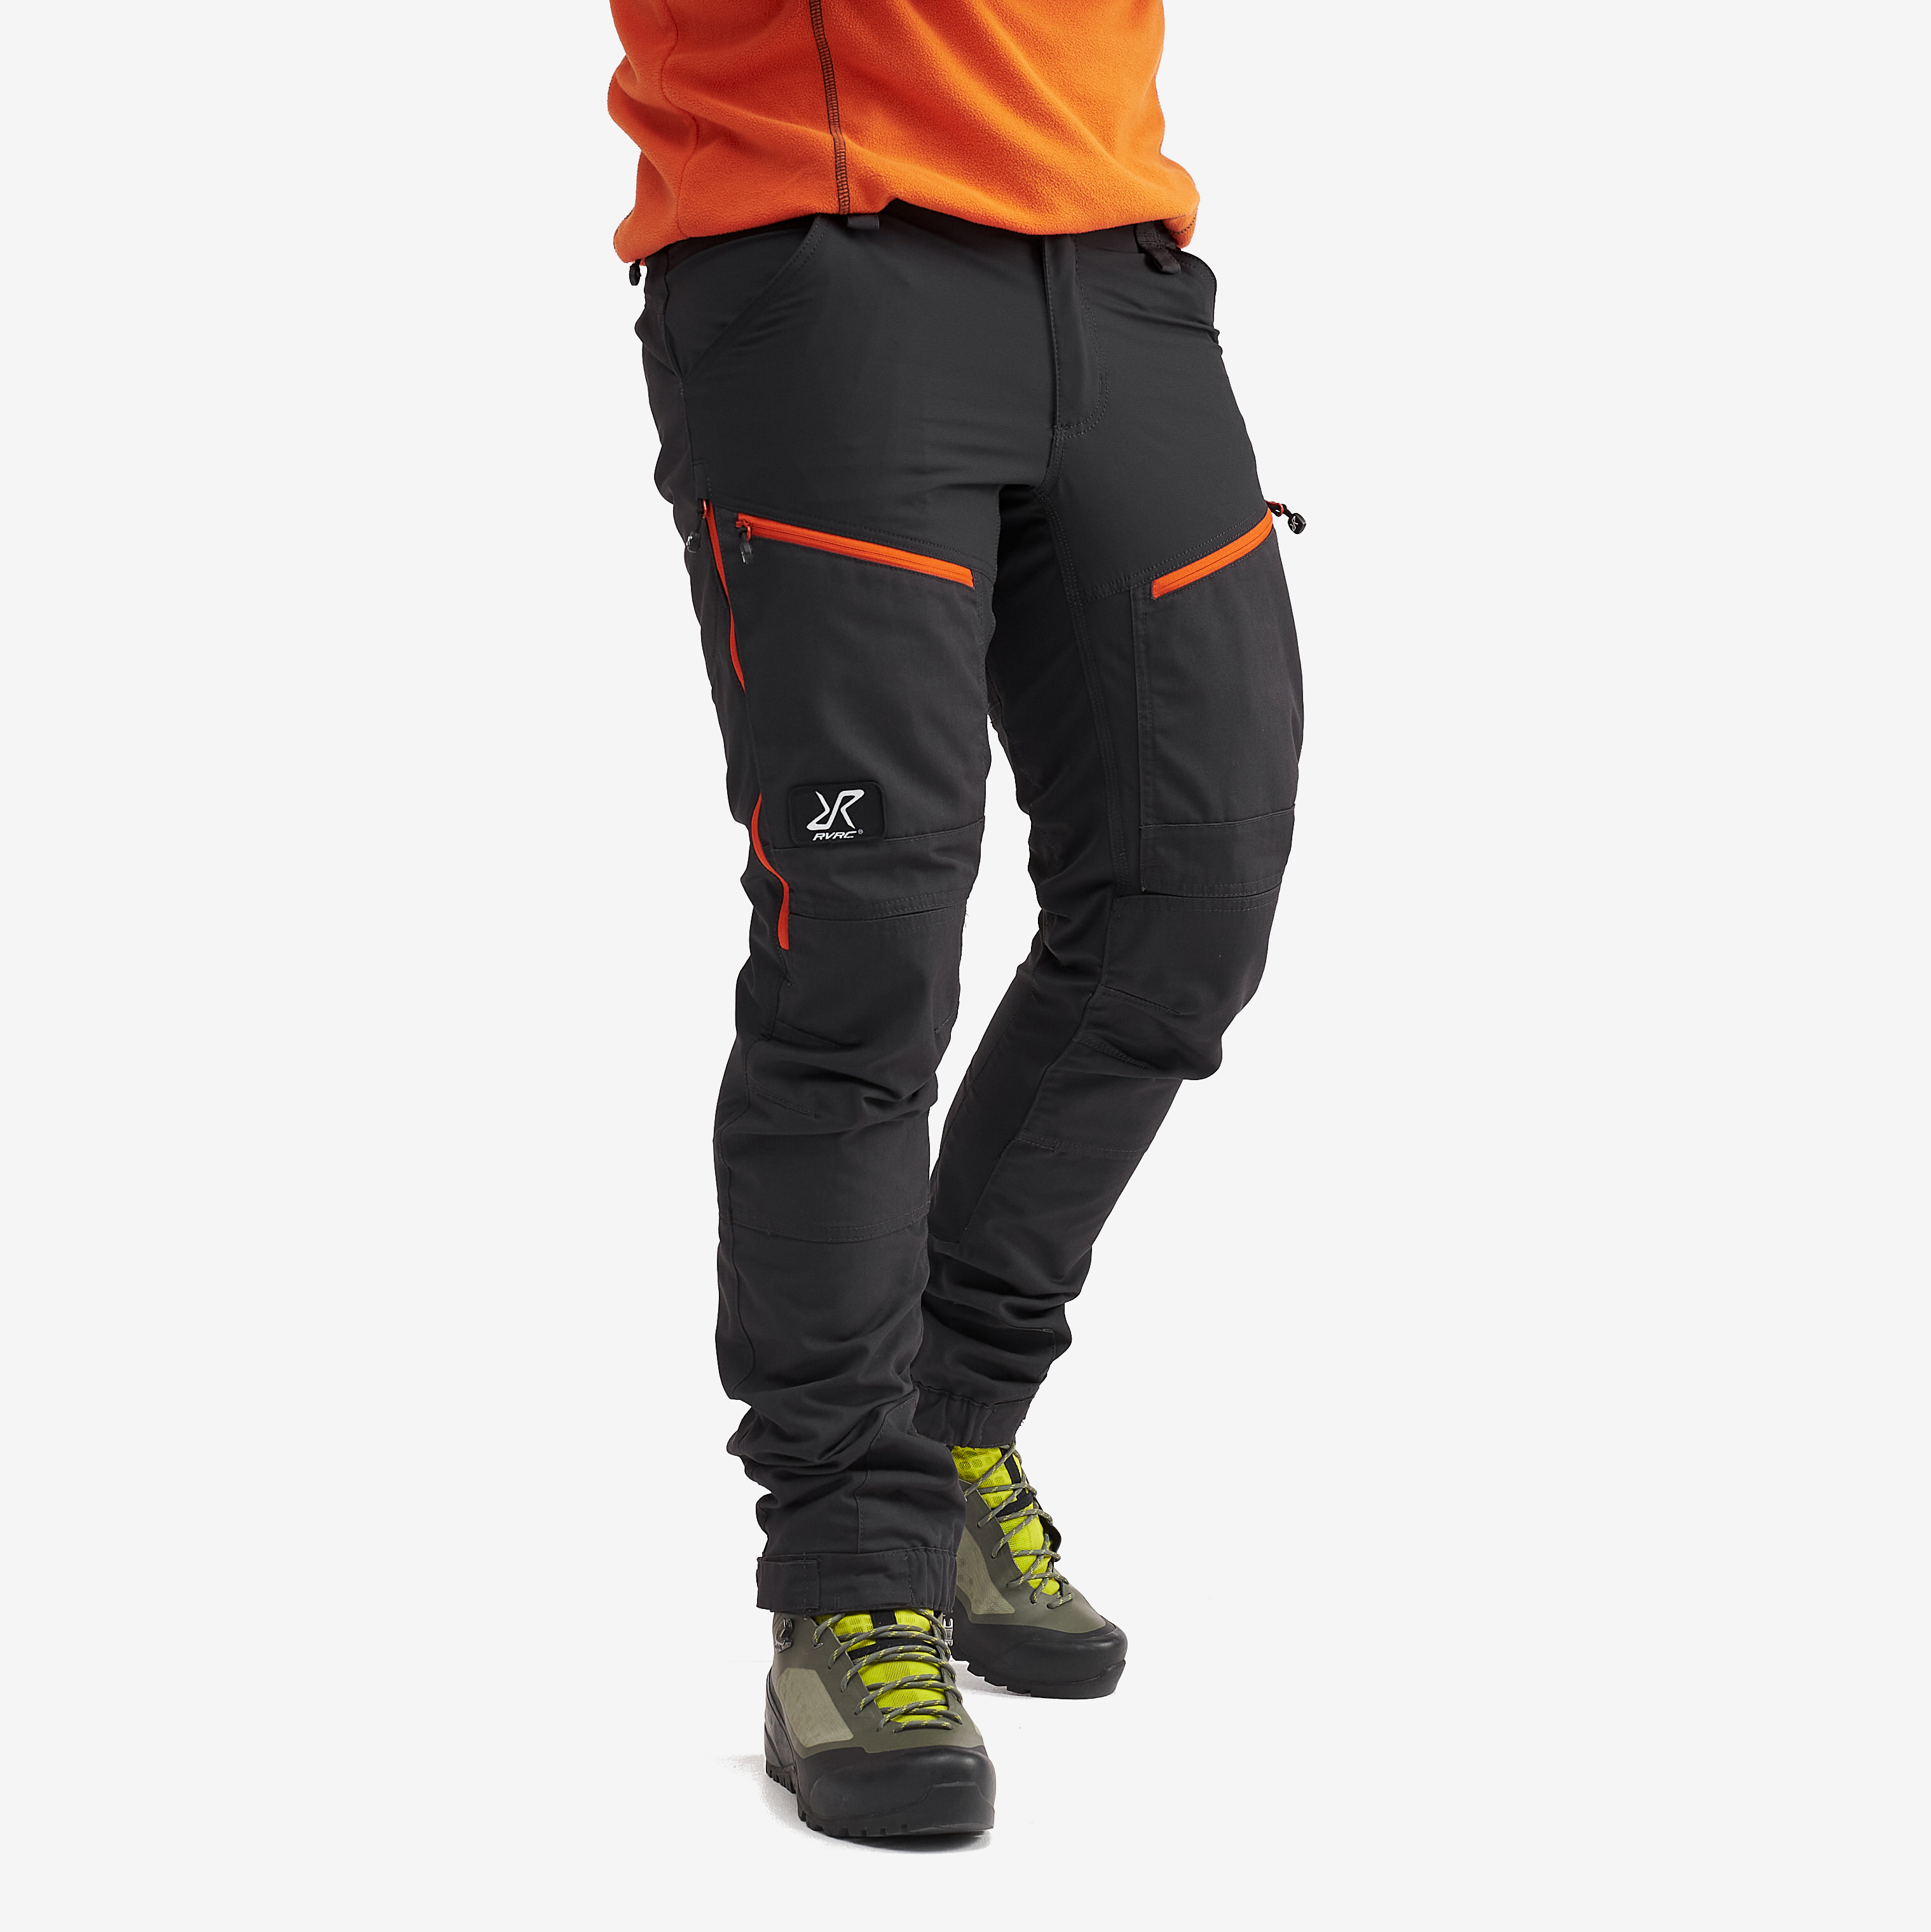 Pantaloni trekking RVRC GP Pro da uomo in grigio scuro